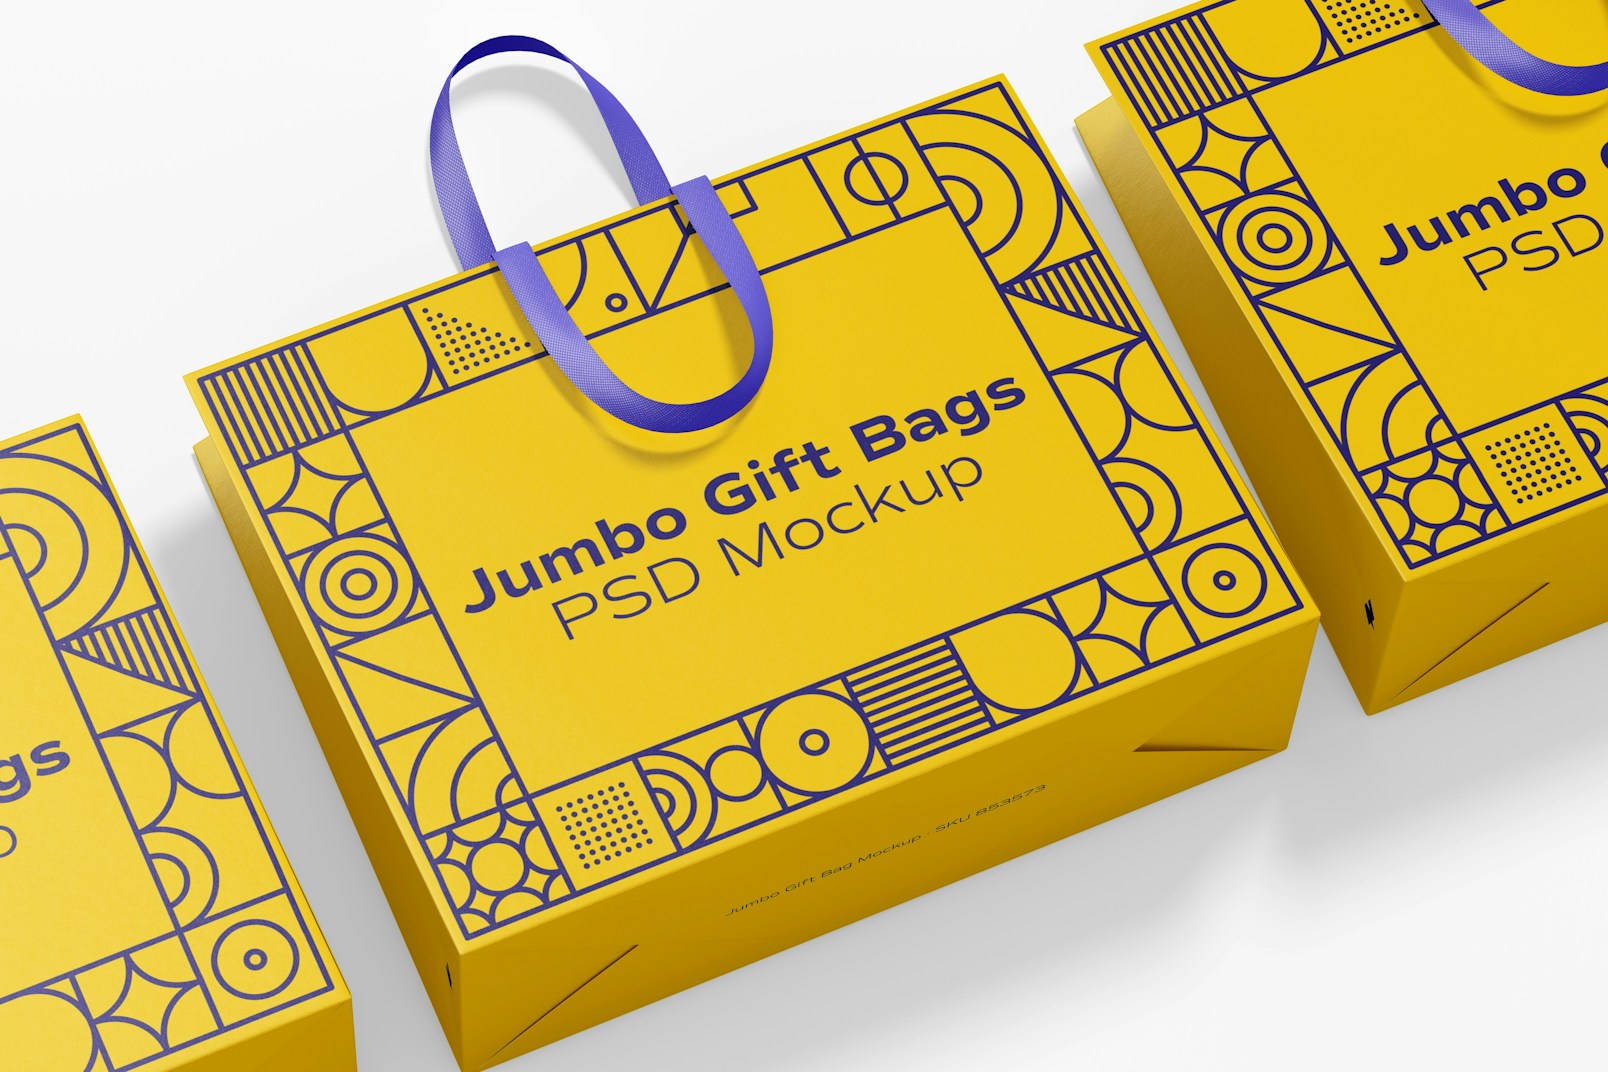 Jumbo Gift Bags with Ribbon Handle Mockup, Top View